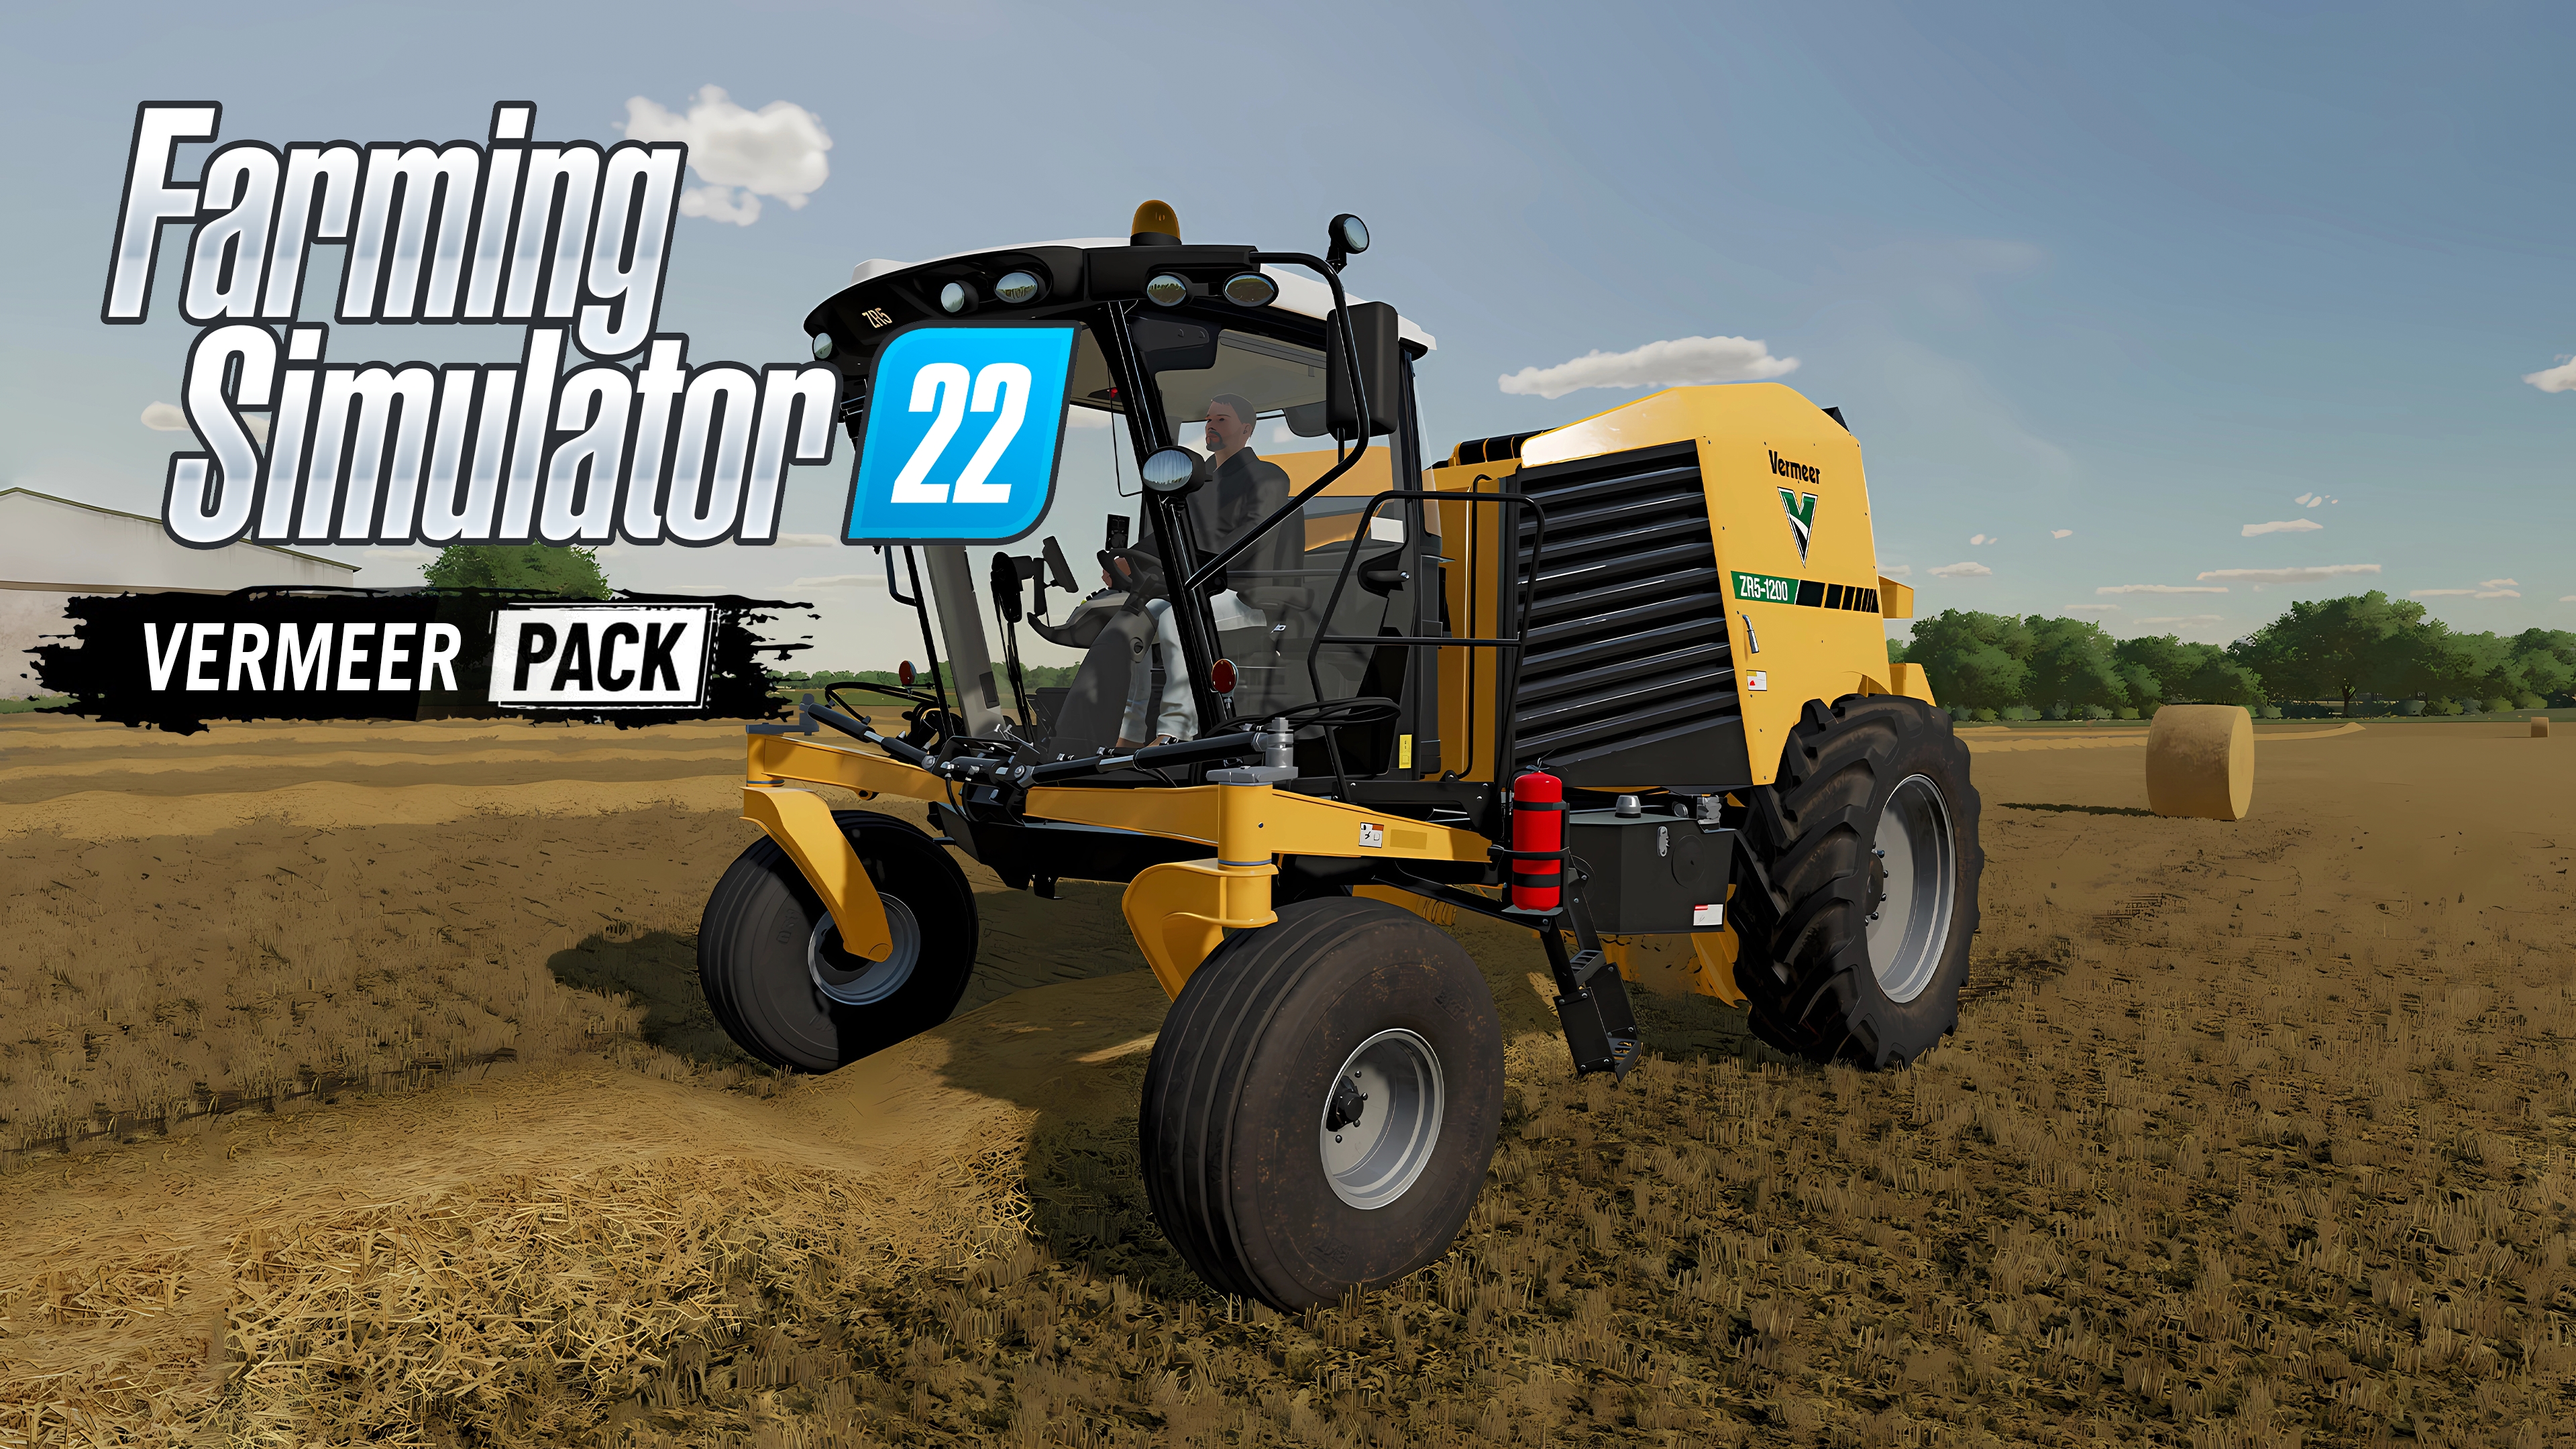 Farming Simulator 22 - Kubota Pack no Steam